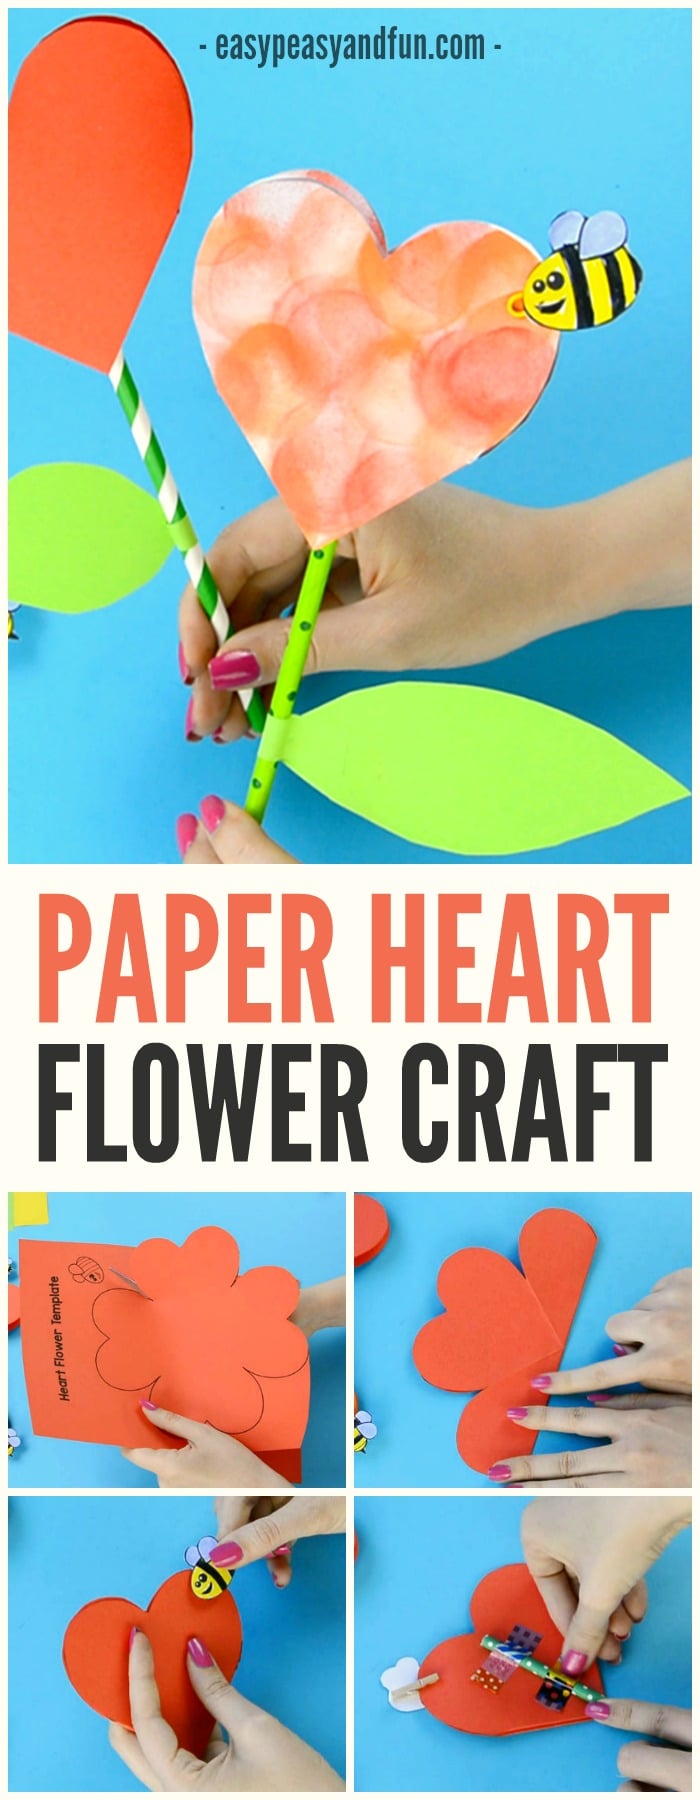 Lovely Paper Heart Flower Craft for Kids to Make